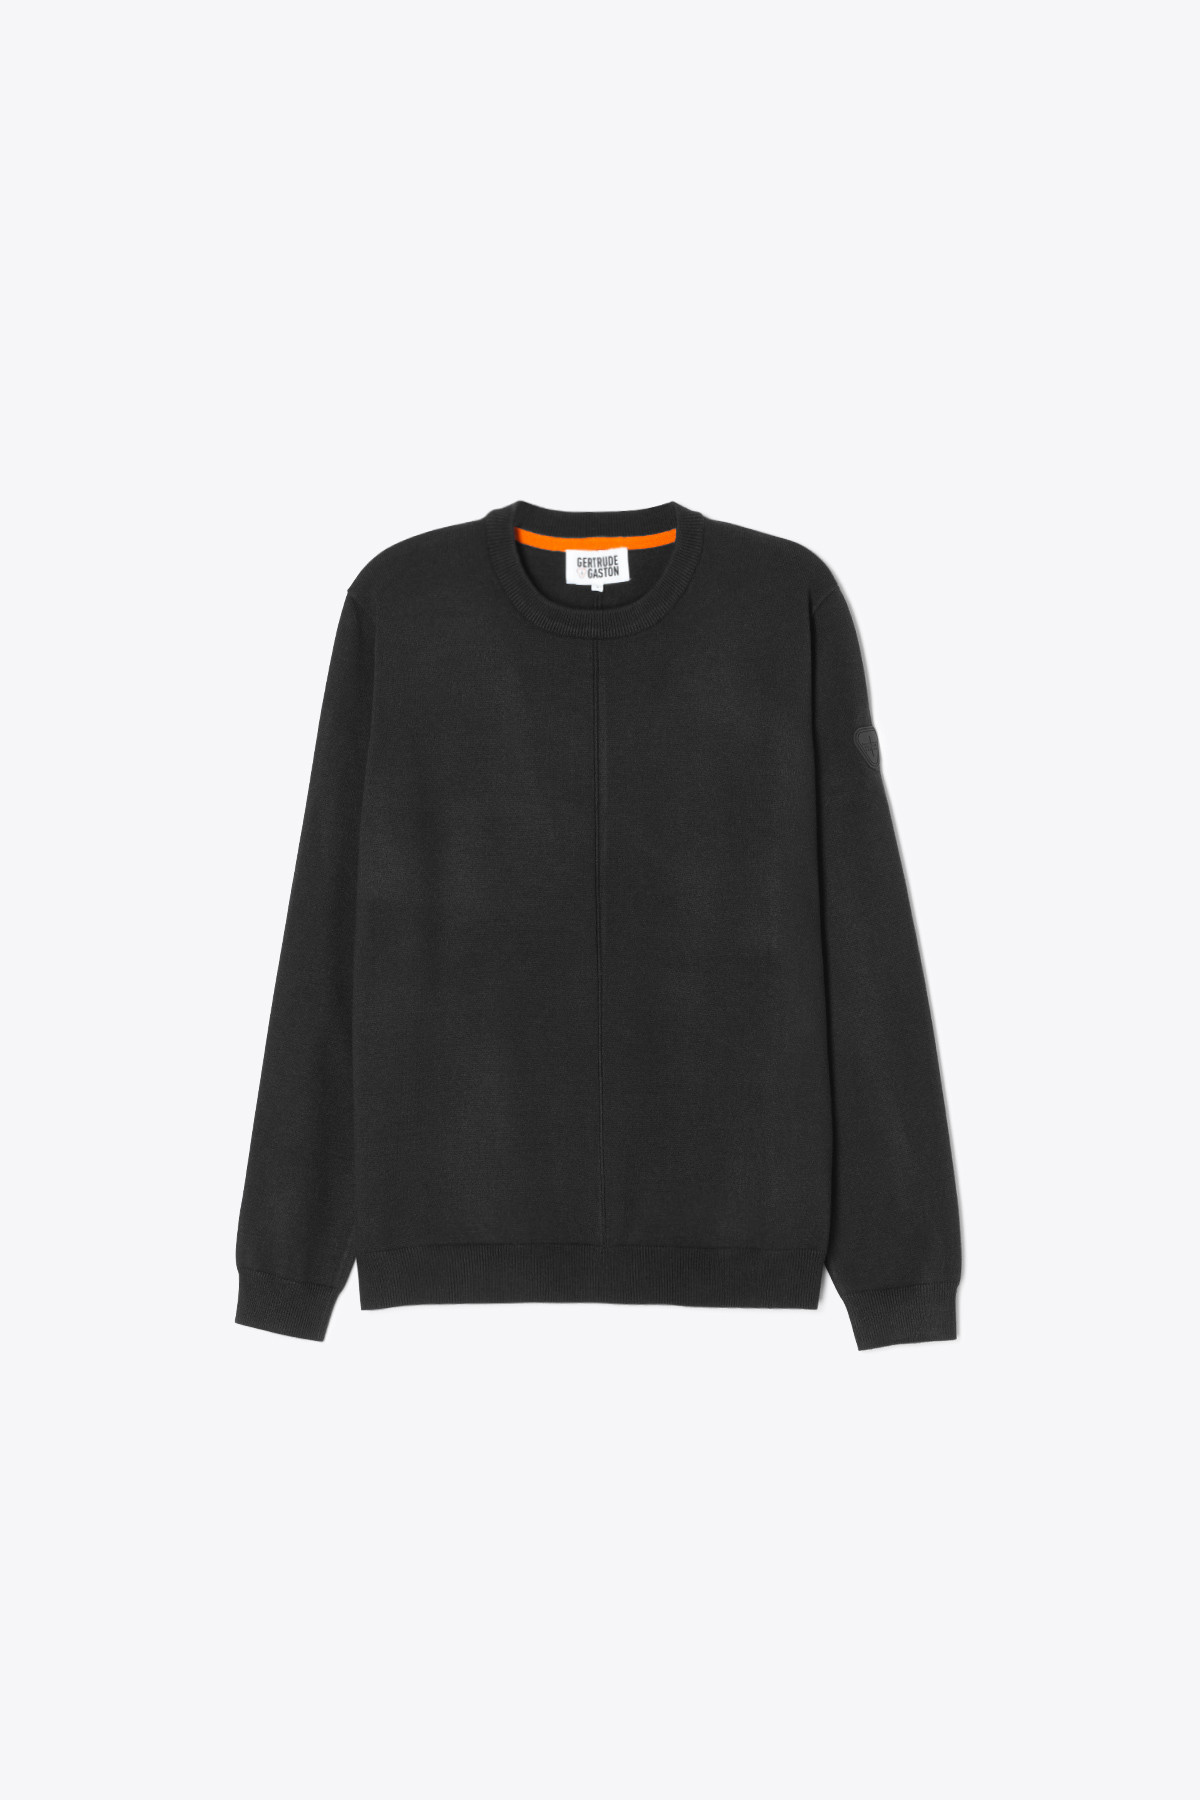 Alois round neck sweater Black